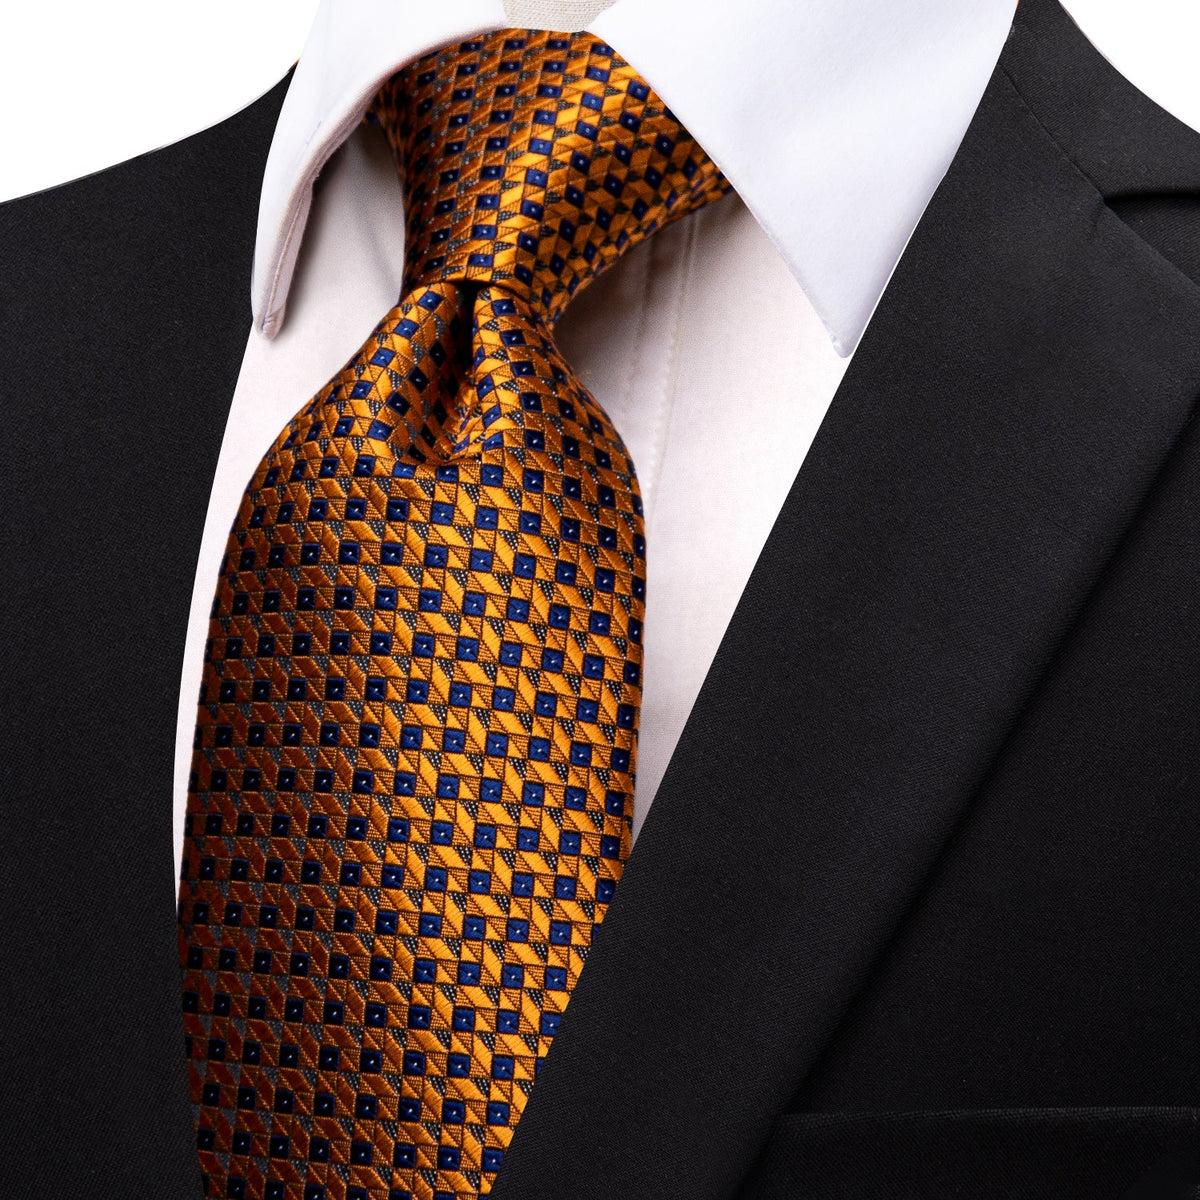 Blue  Golde Necktie Plaid  tie with white polka dots on black suit white shirt 